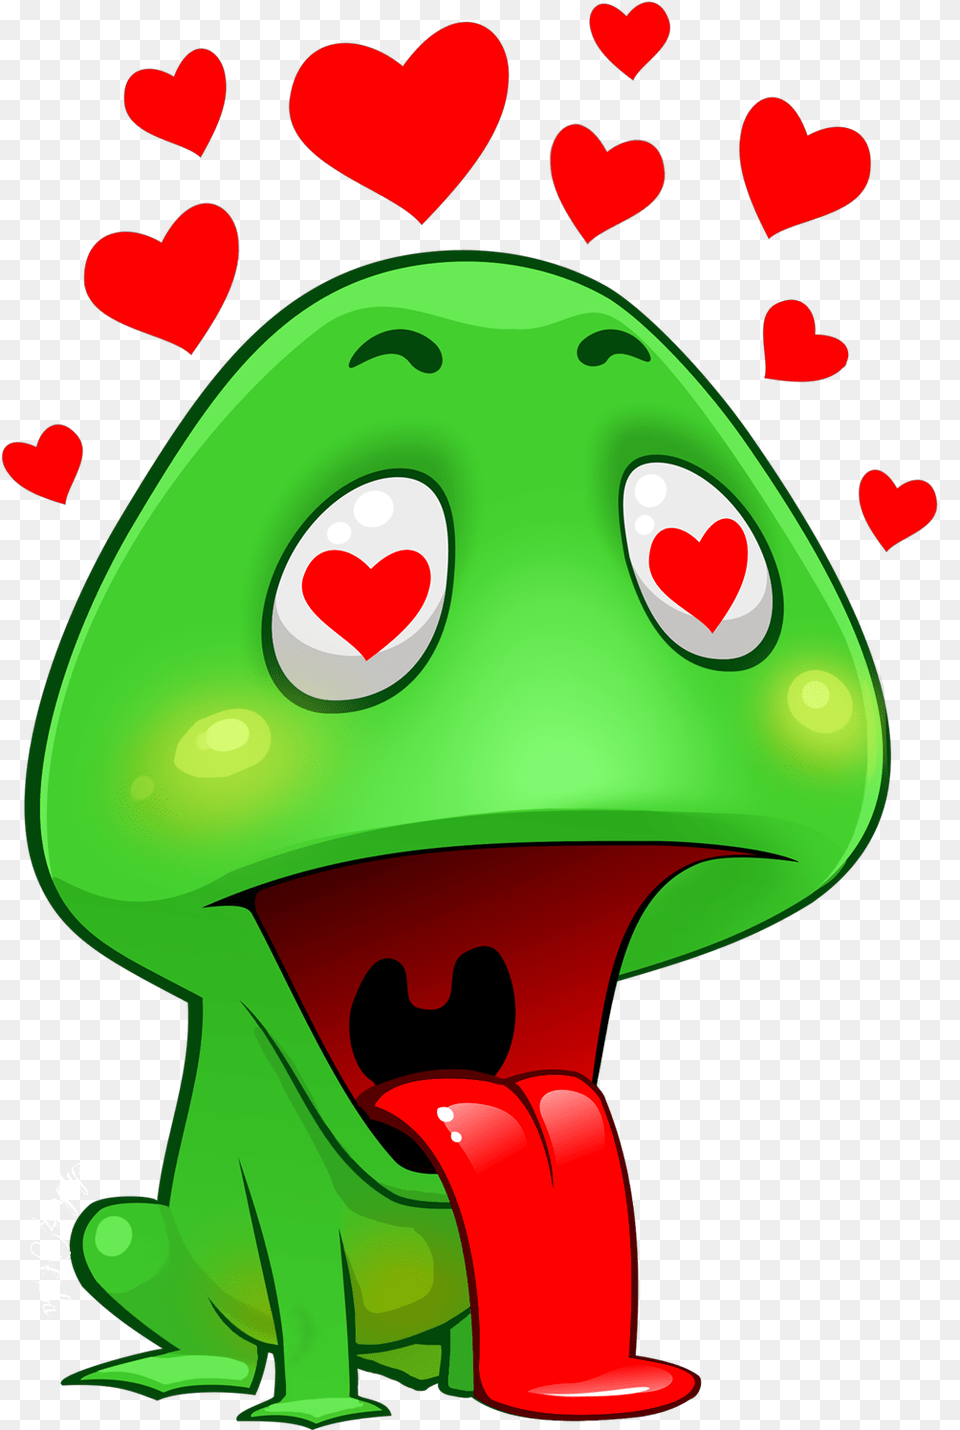 Download Art Camfrog Sticker Love Plant Hd Hq Camfrog Sticker, Green, Amphibian, Animal, Frog Png Image